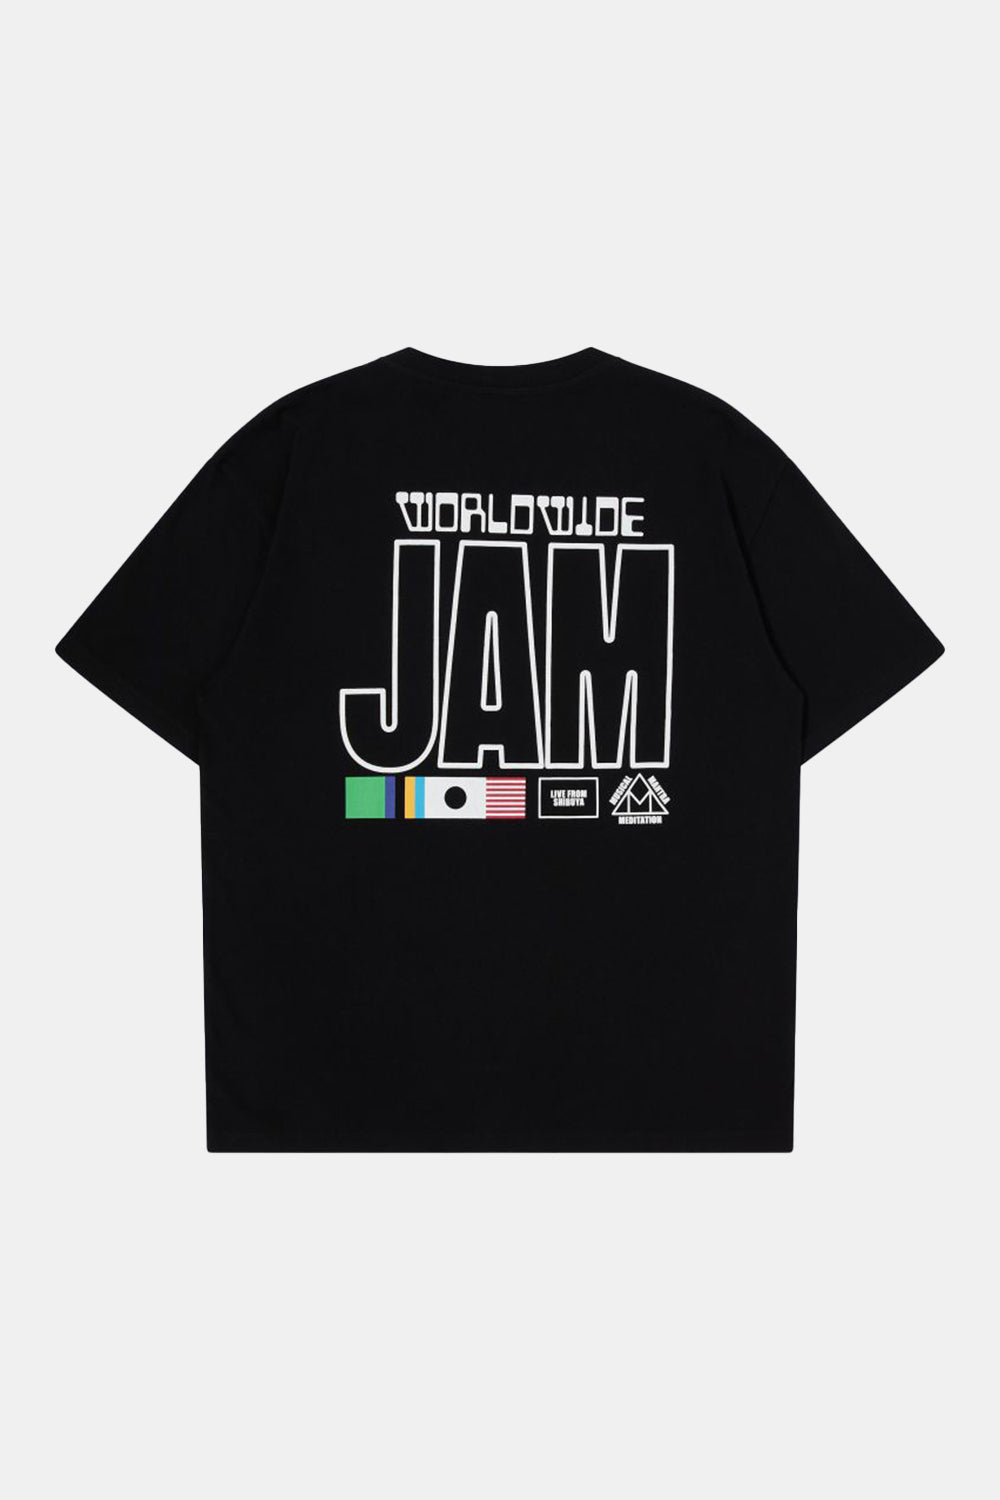 Edwin Jam T-Shirt (Black)